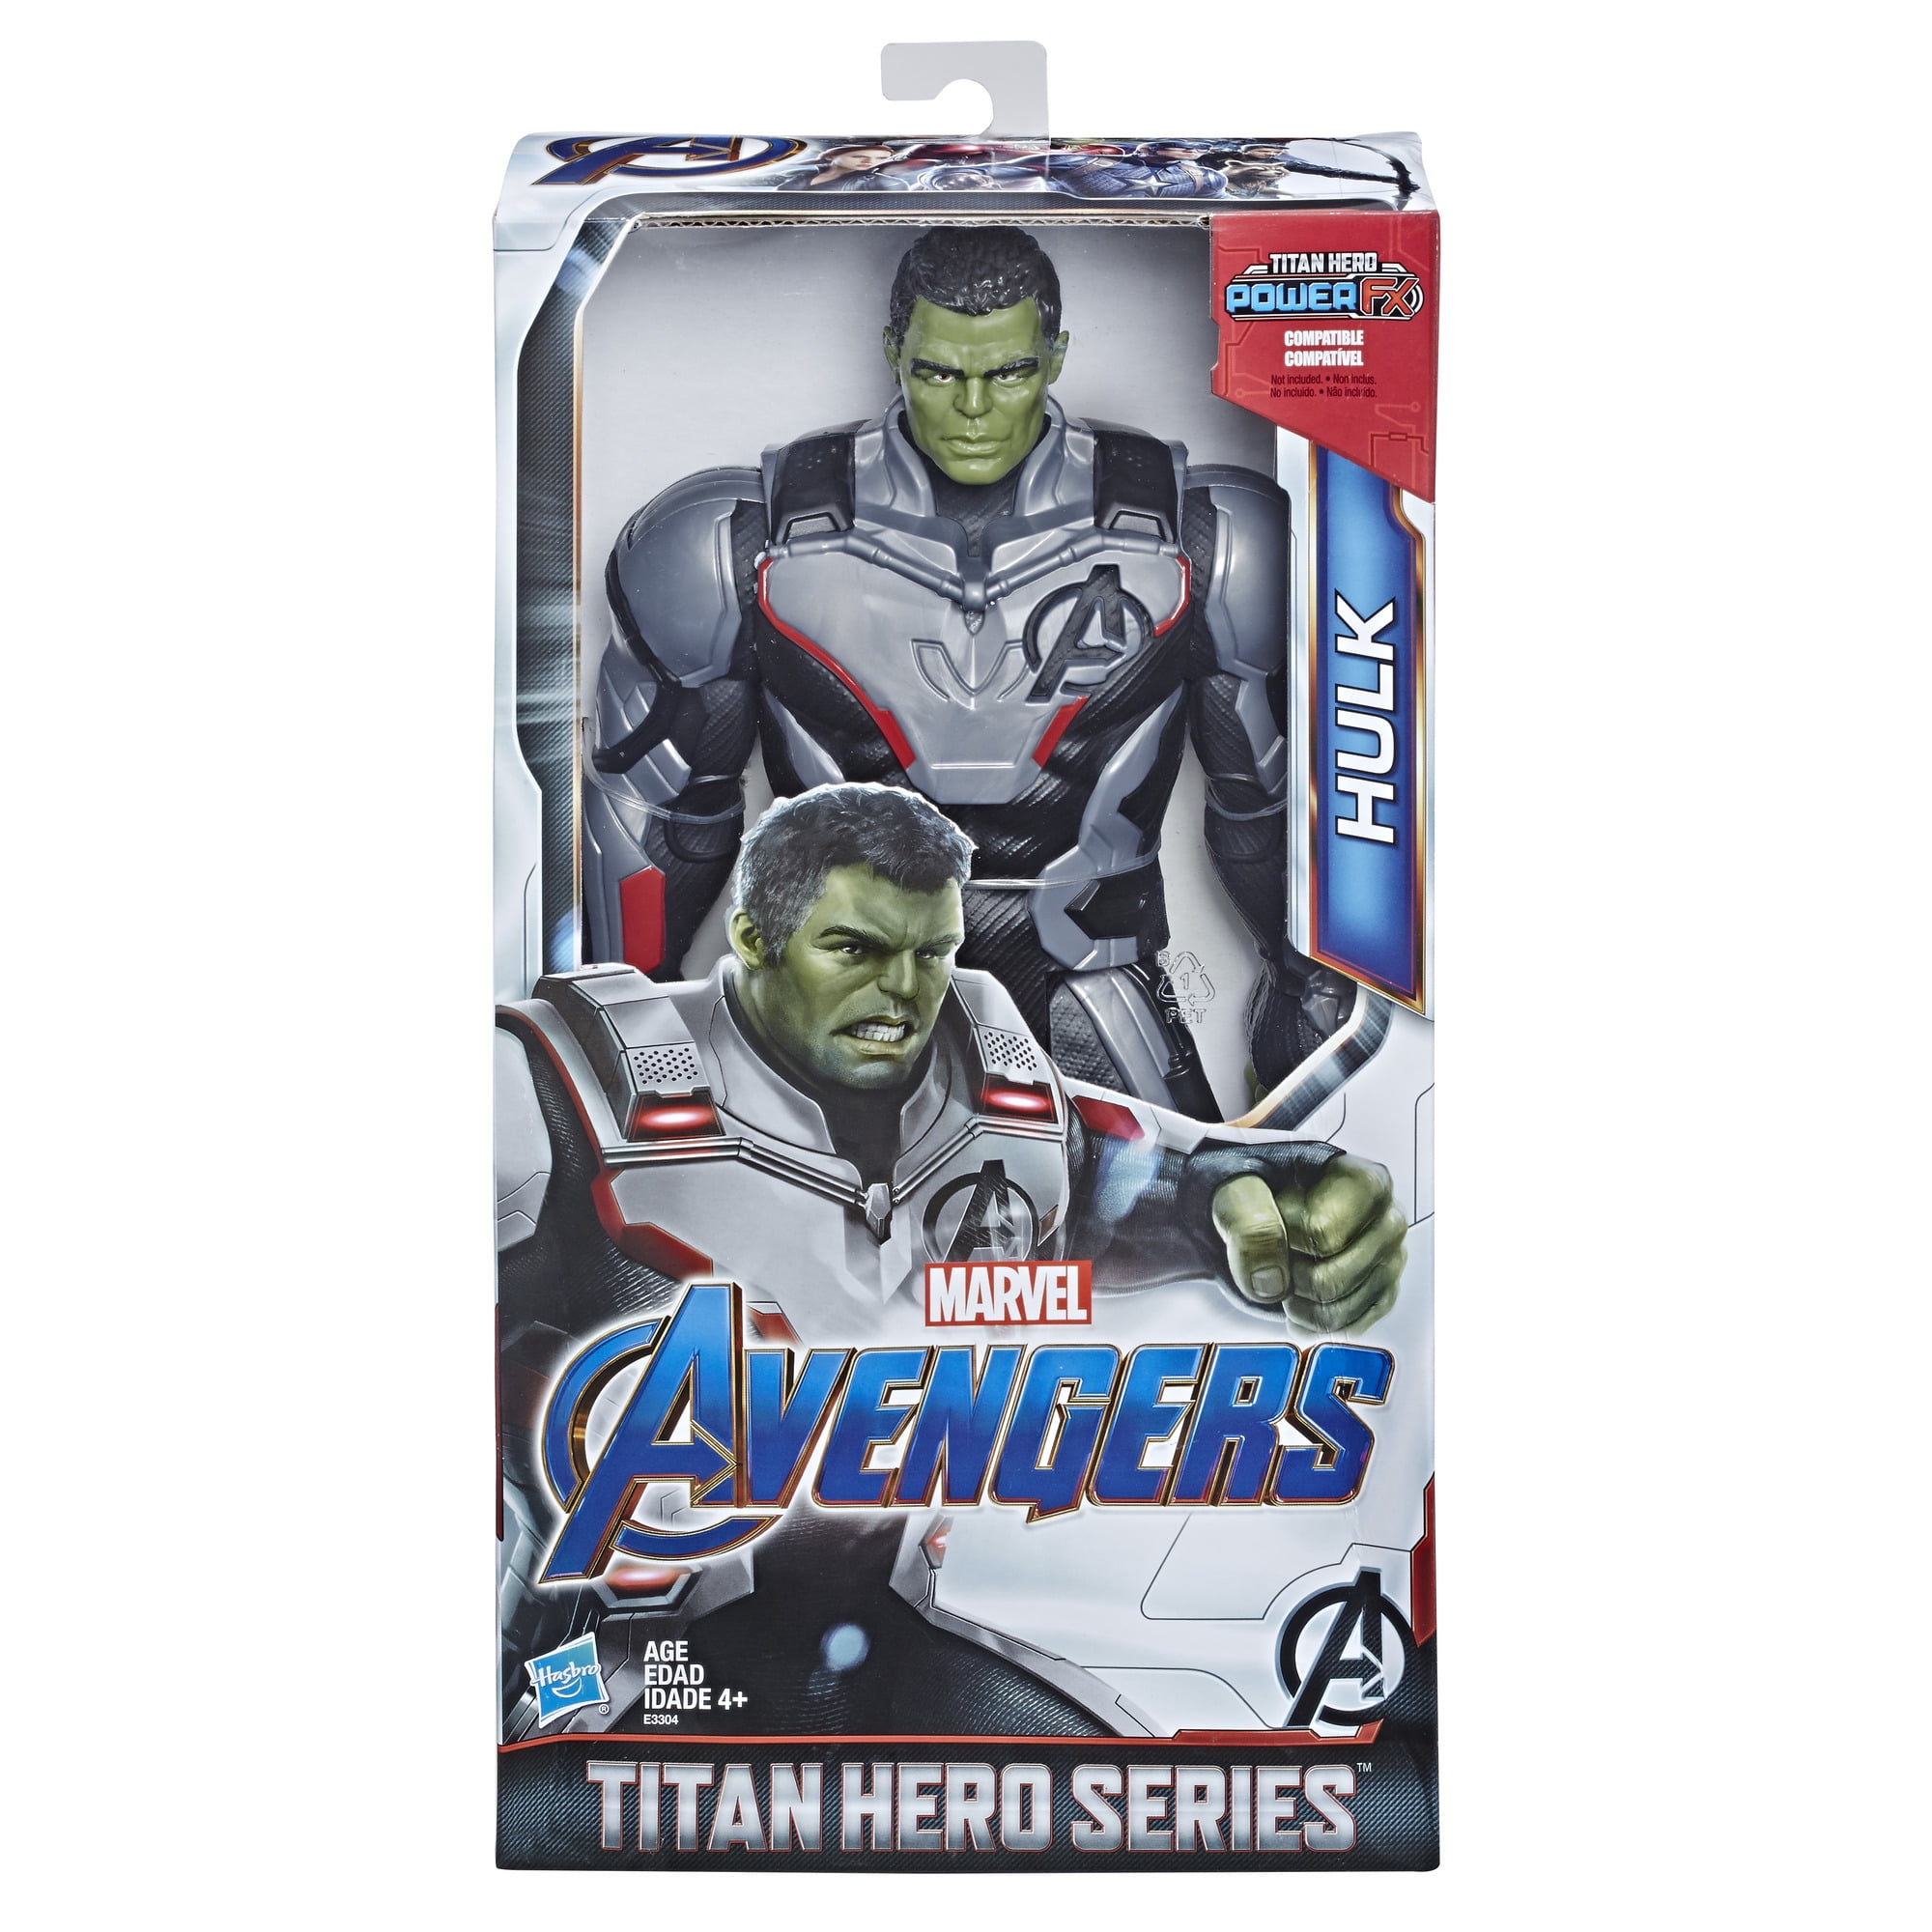 Hulk Titan Series Marvel Avengers Super Hero Action Figure Kid Toy Boys Gift 12" 